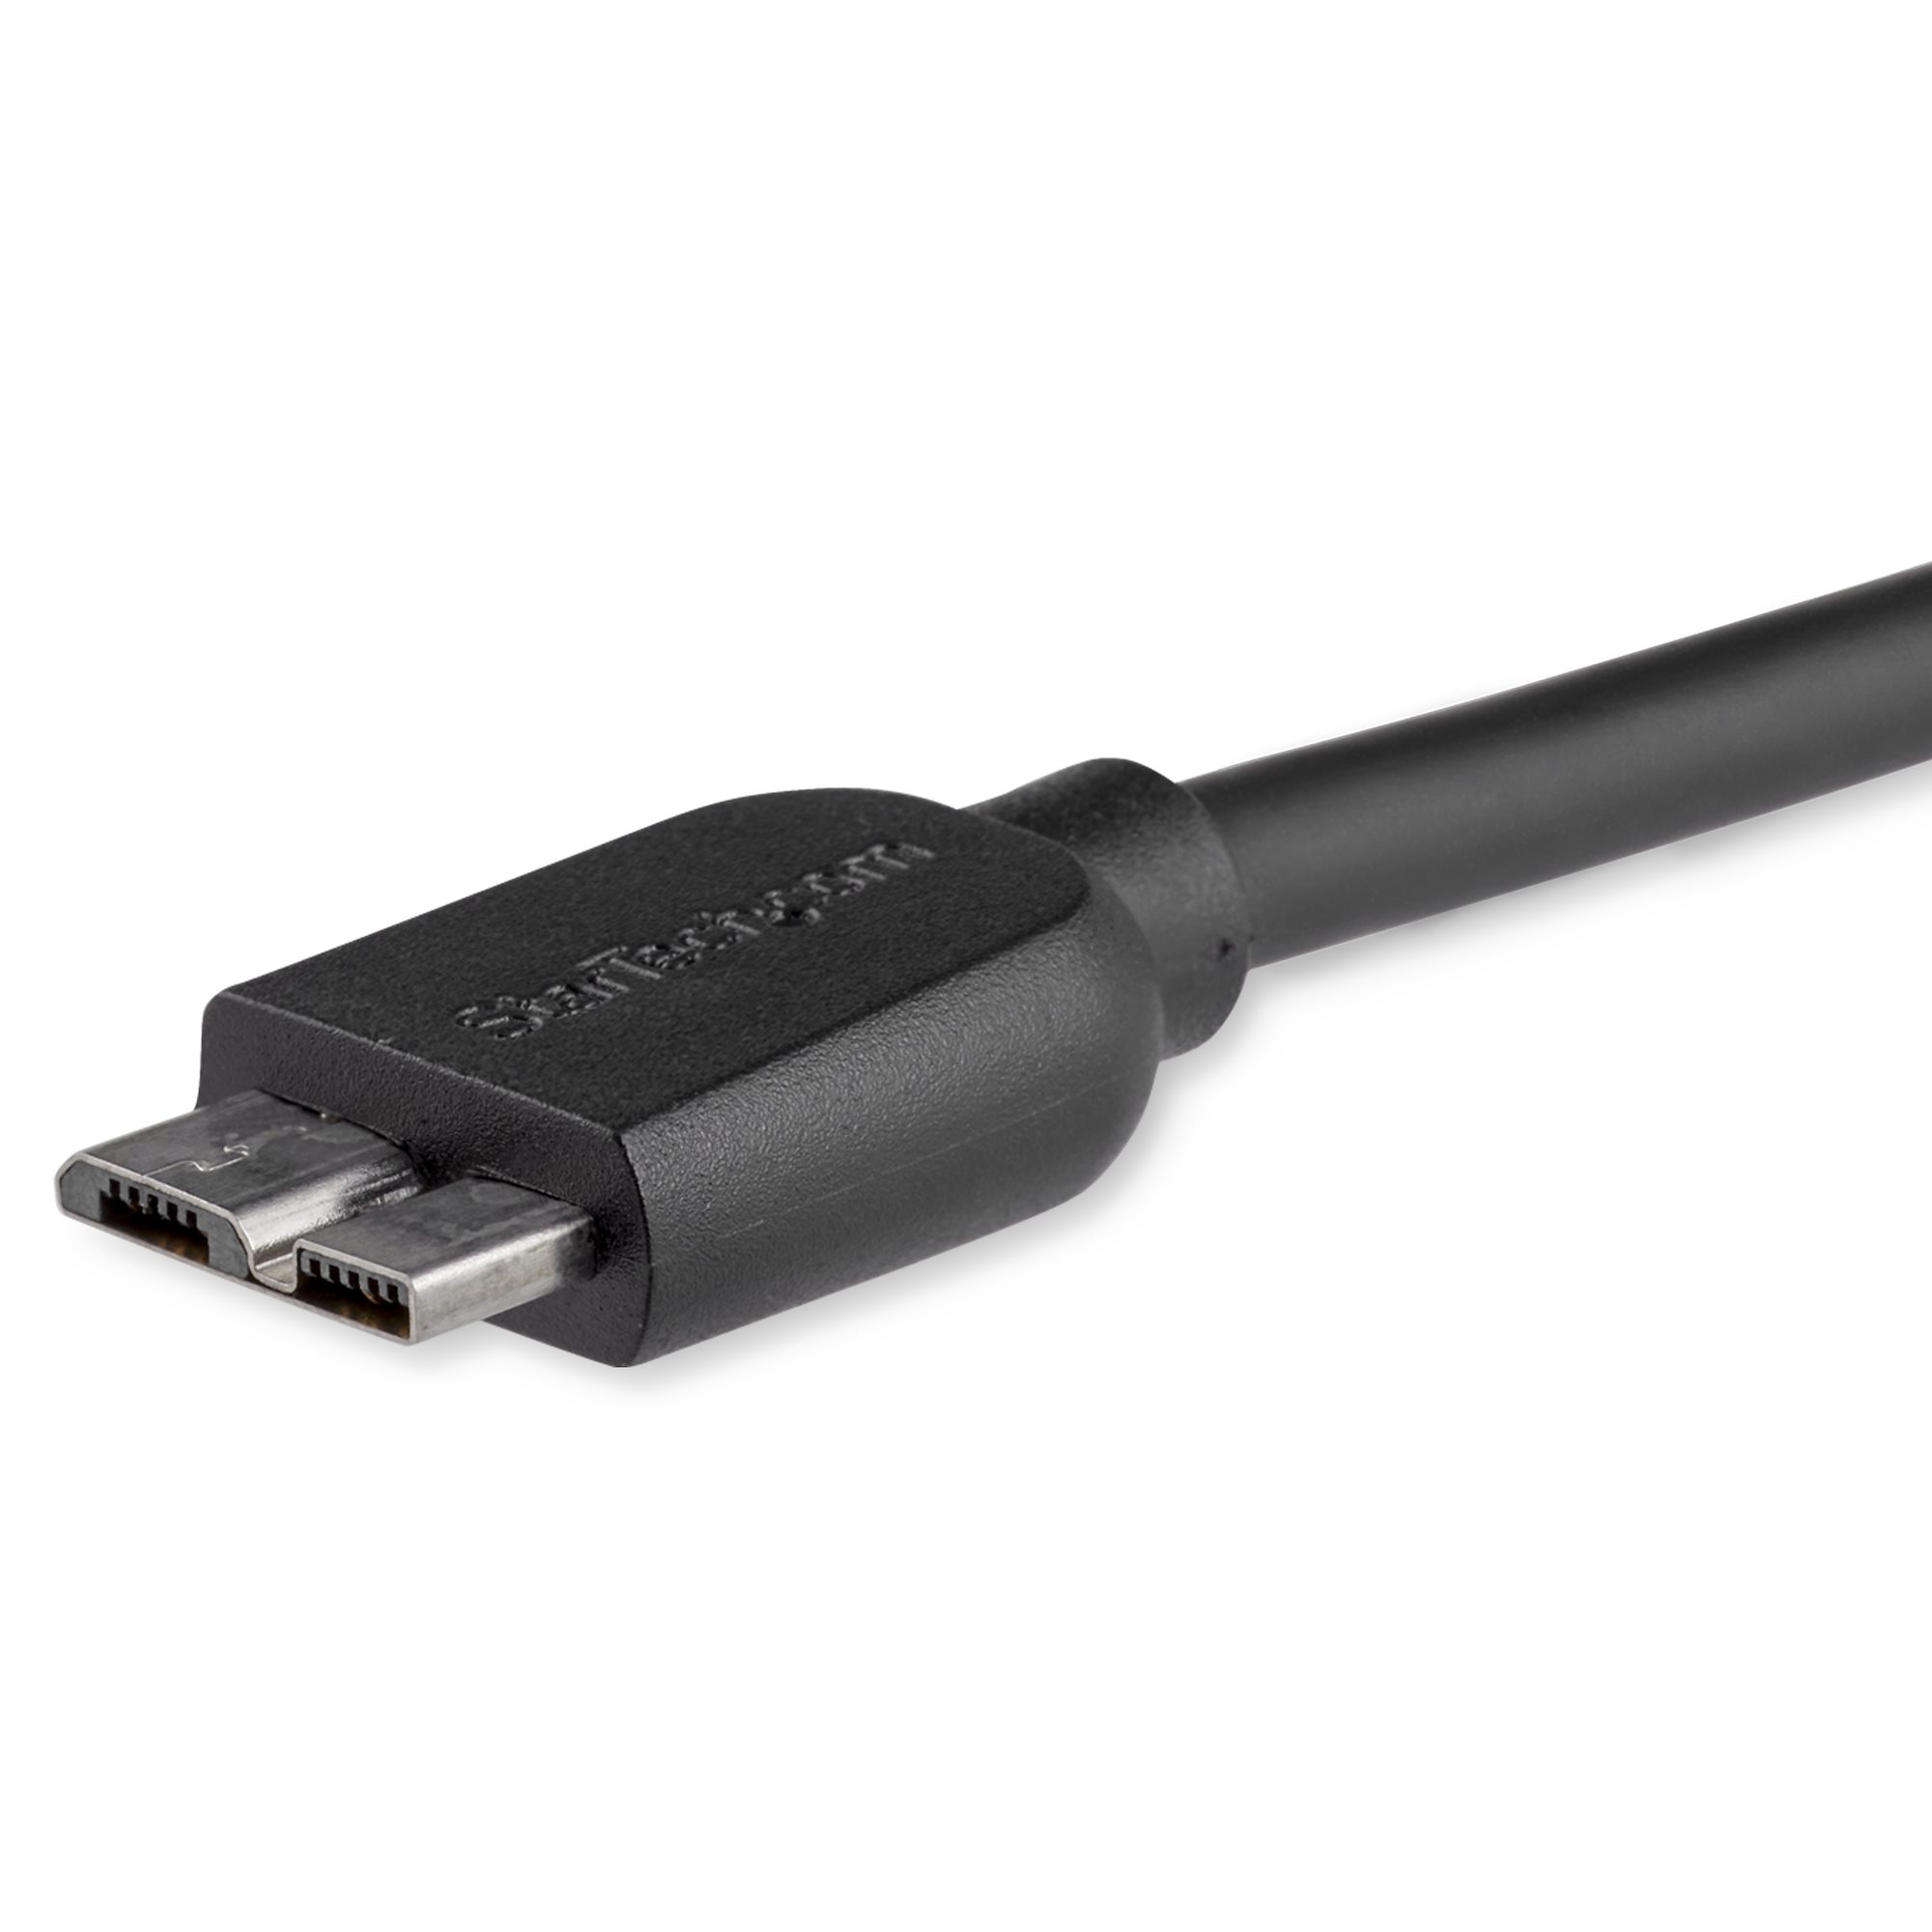 vare Uventet mirakel 15cm 6in Slim USB 3.0 Micro B Cable - USB 3.0 Cables | StarTech.com